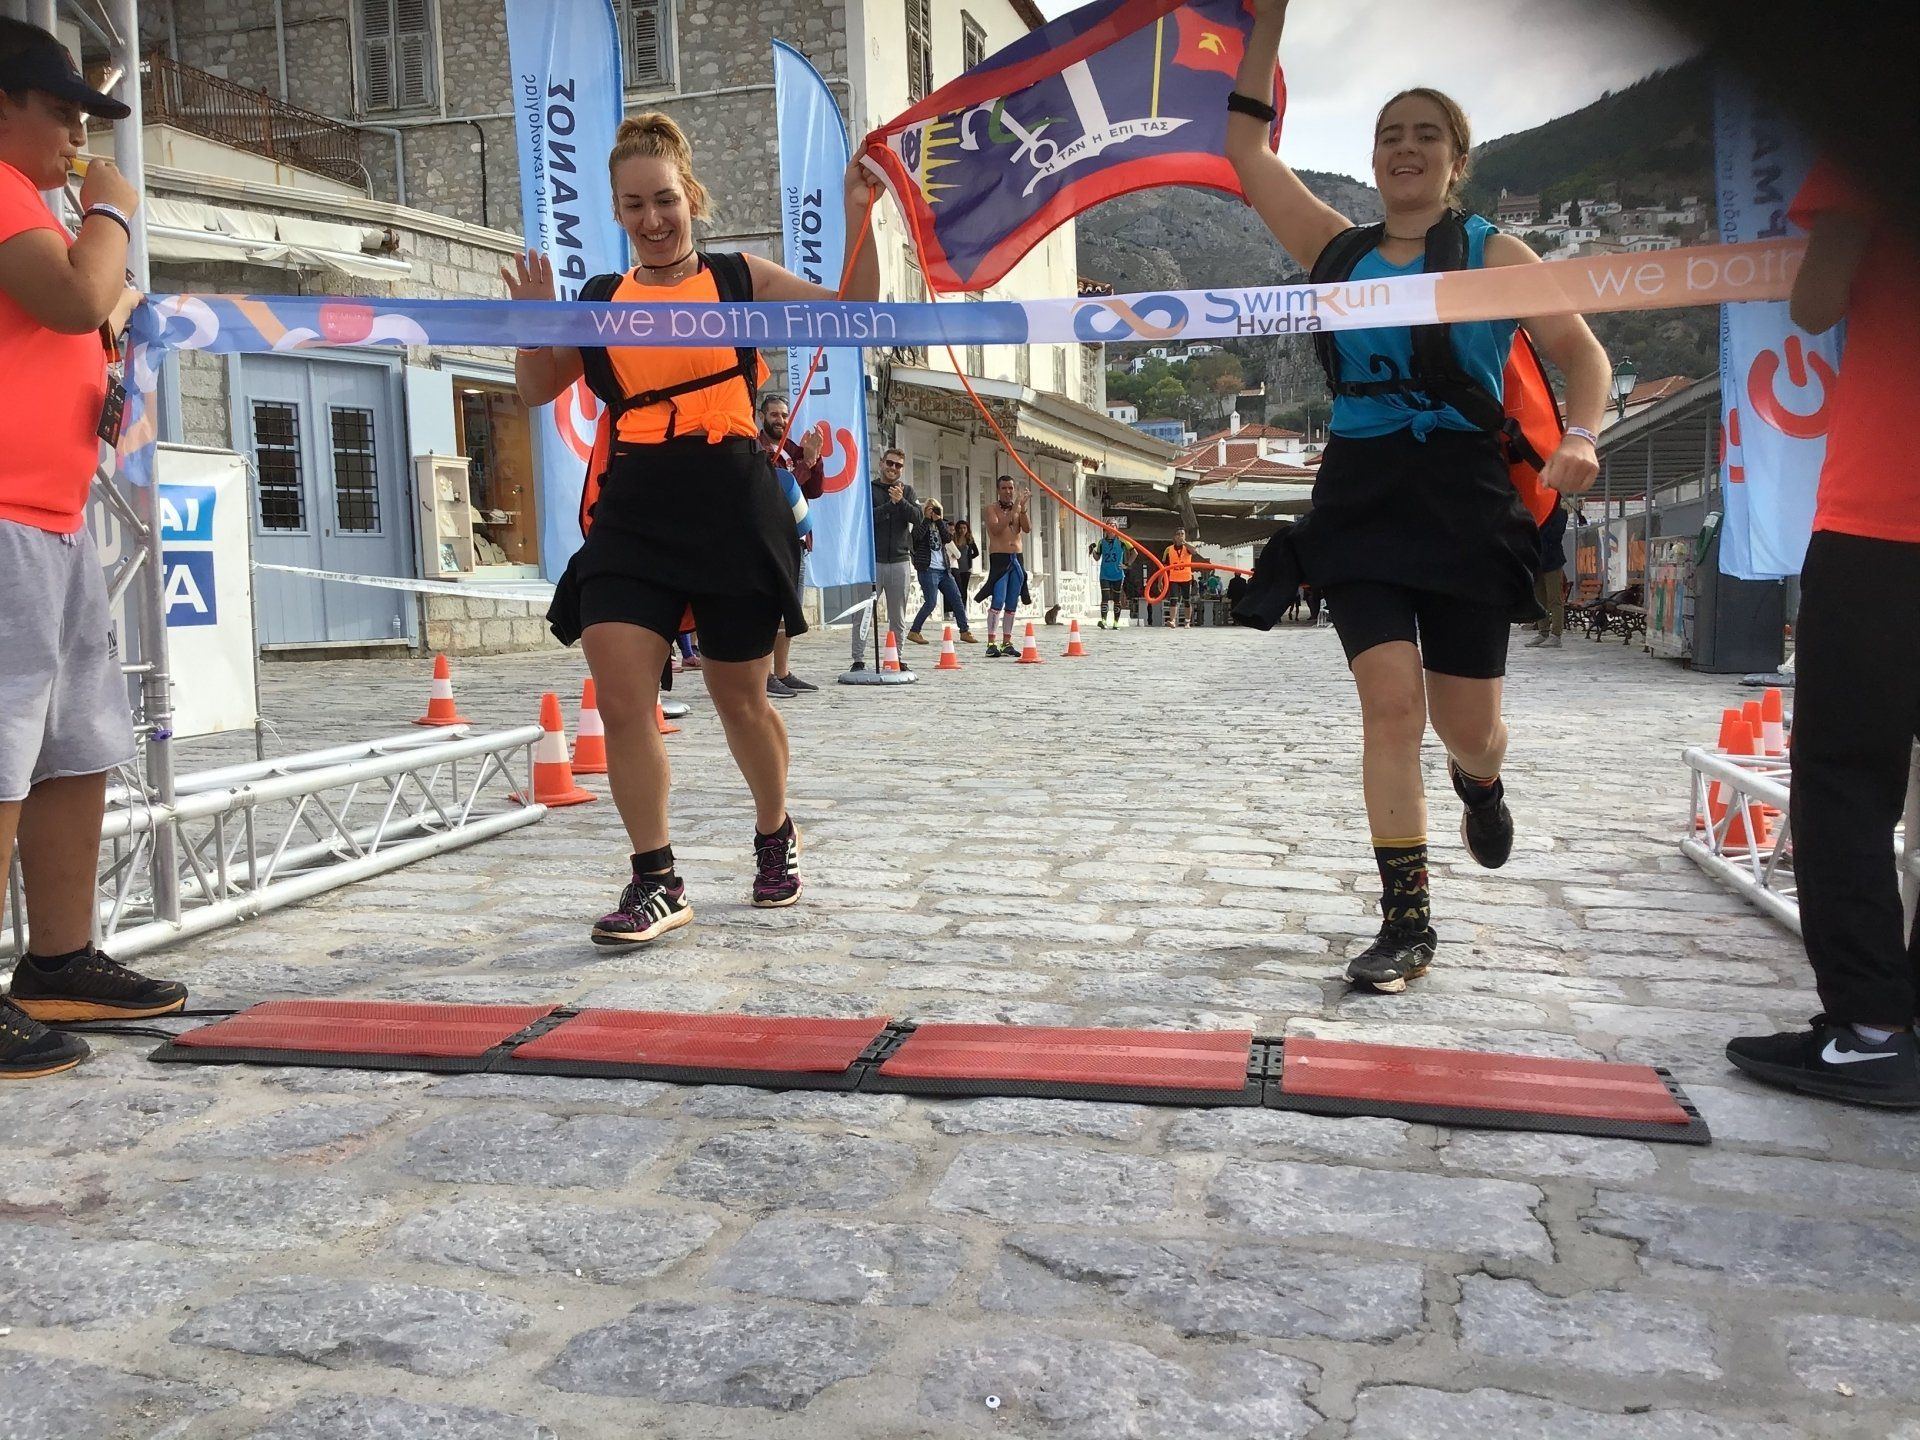 Arabella & Kathryn crossing the finish line of the core distance SwimRun Hydra 2019 event.